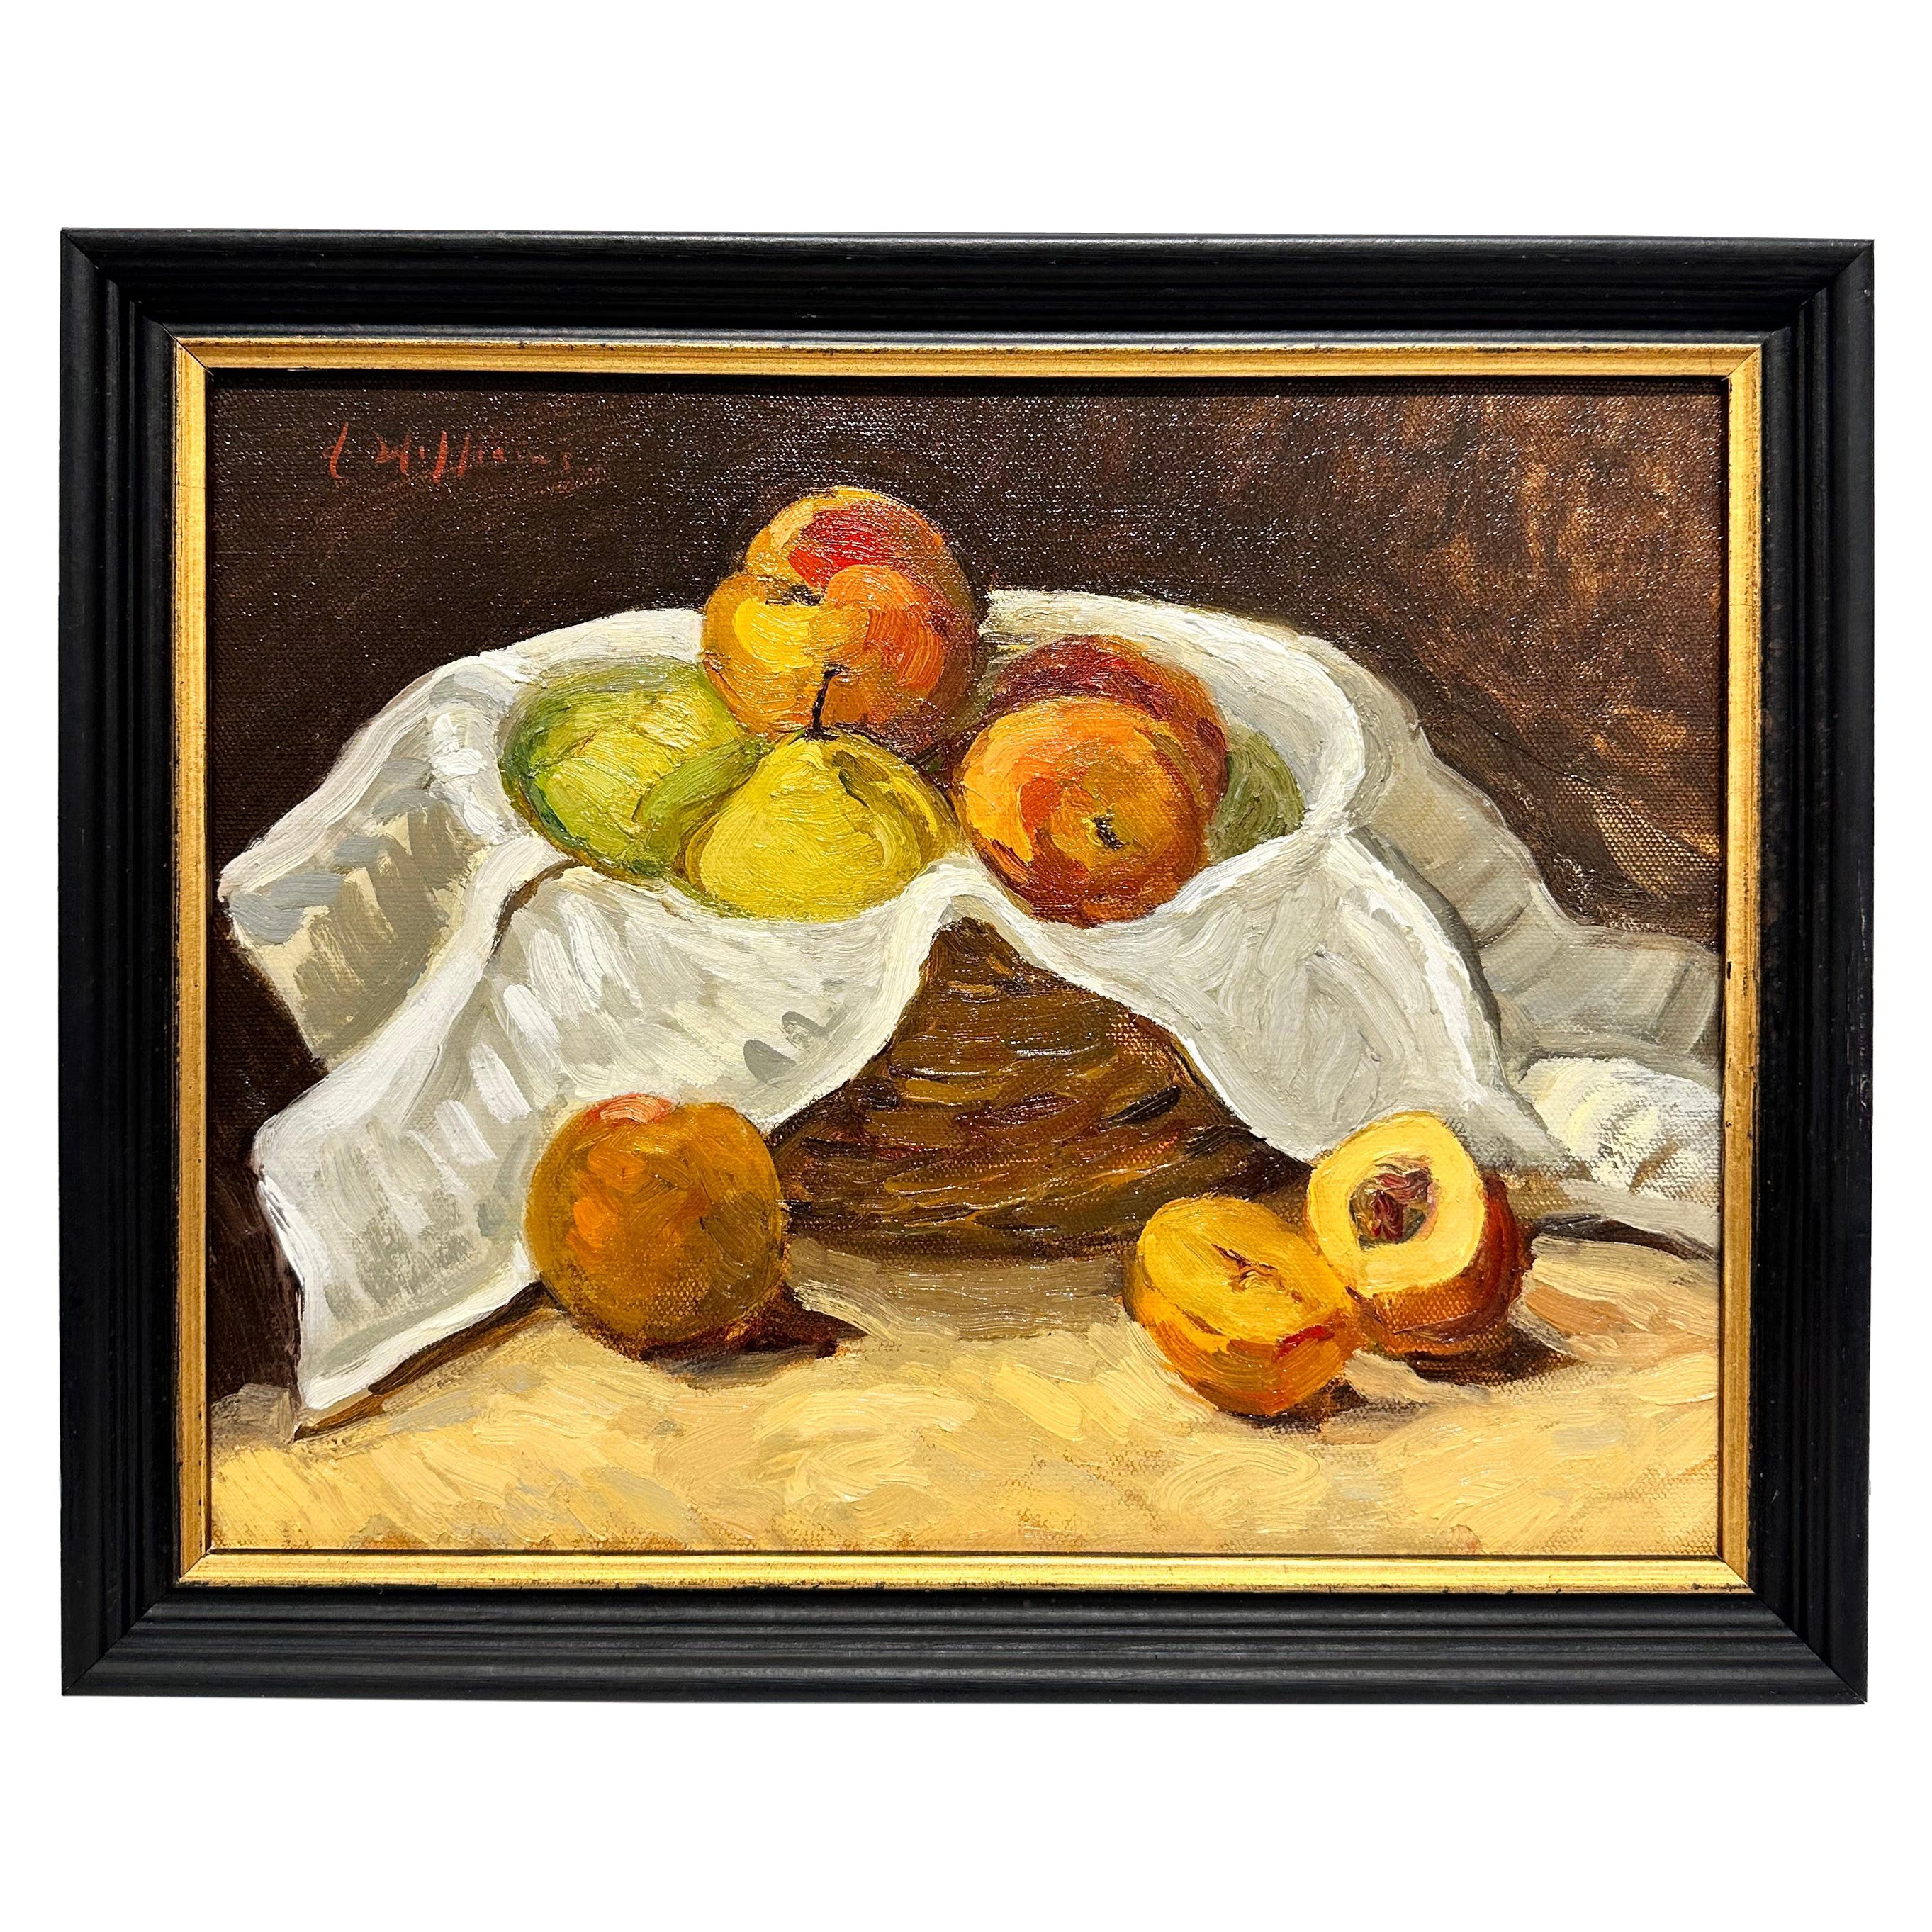 Basket of Fruit "Original Oil Painting" For Sale